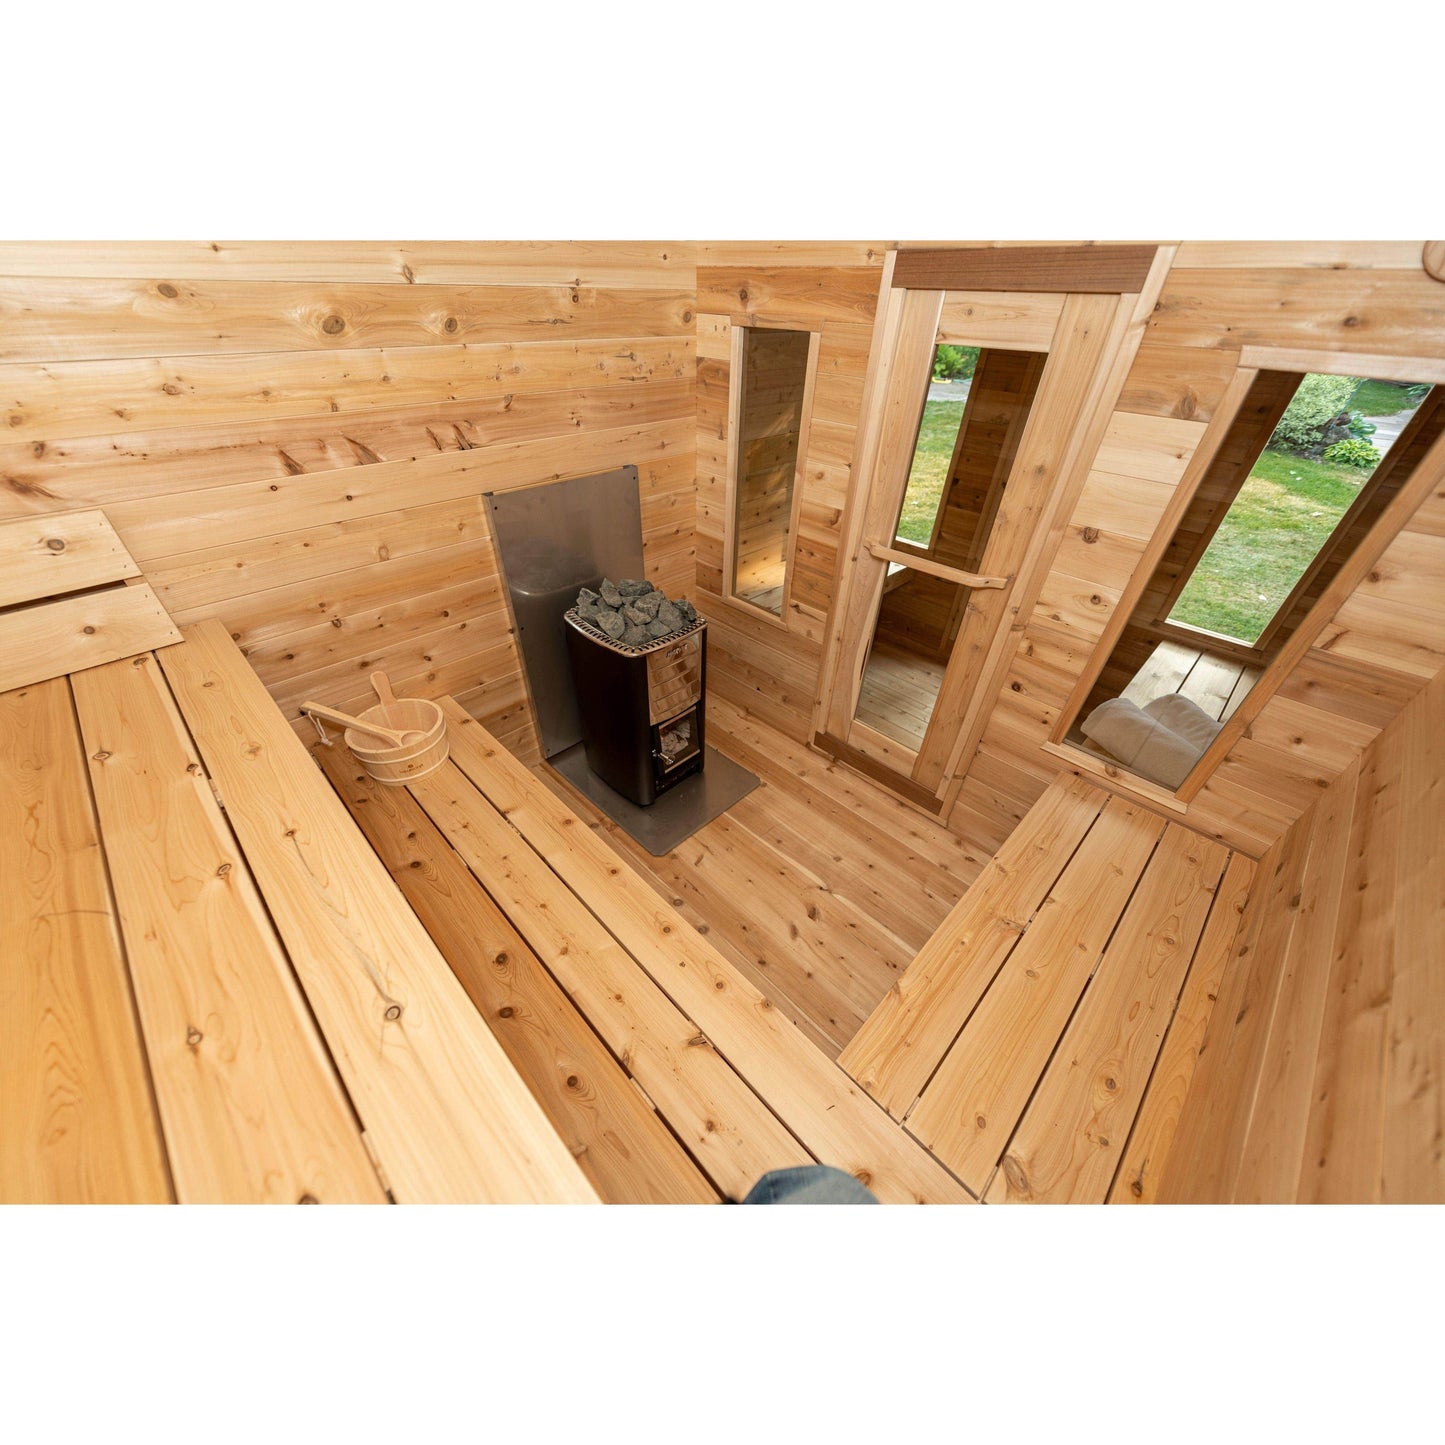 Dundalk Leisurecraft Canadian Timber Georgian Cabin Sauna with Change Room